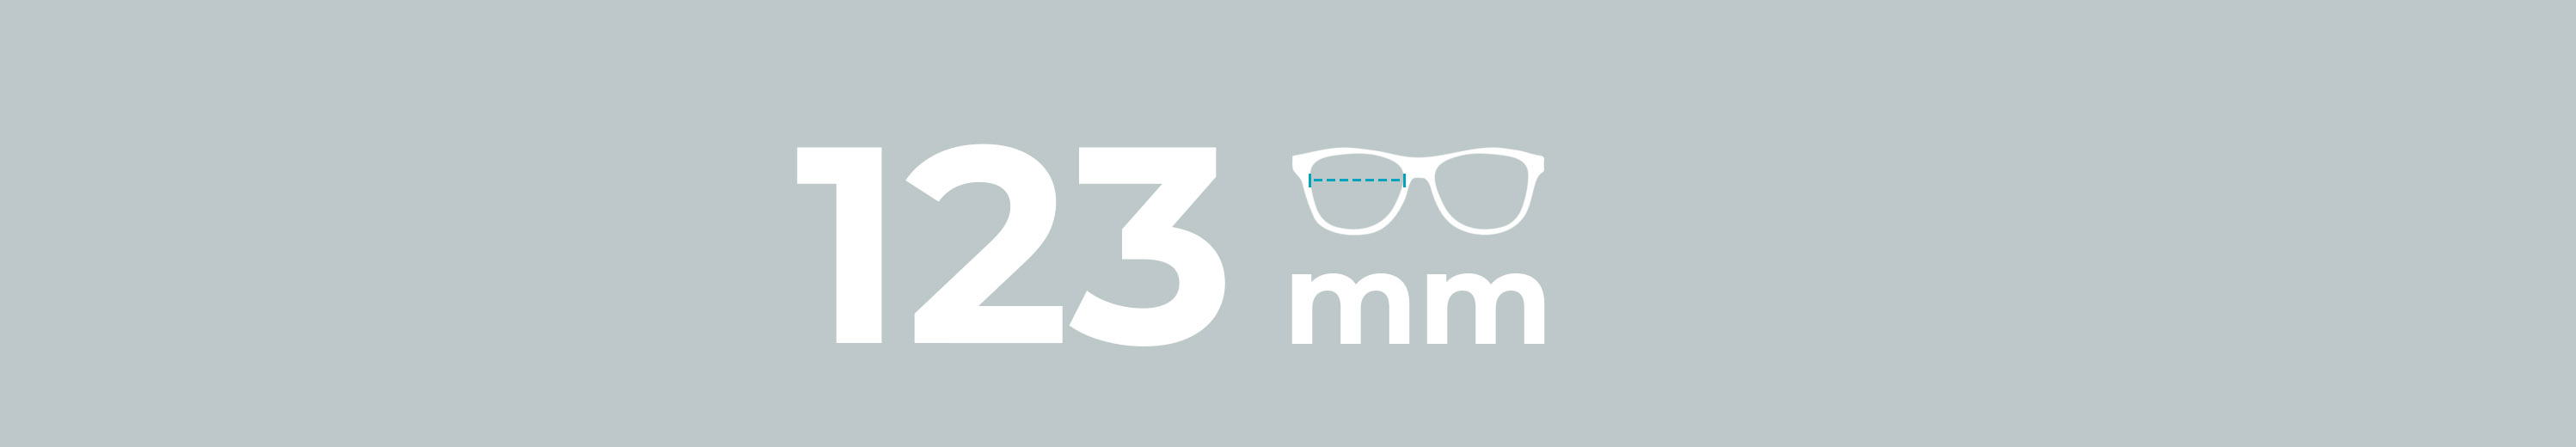 Lens Size: 123mm Glasses